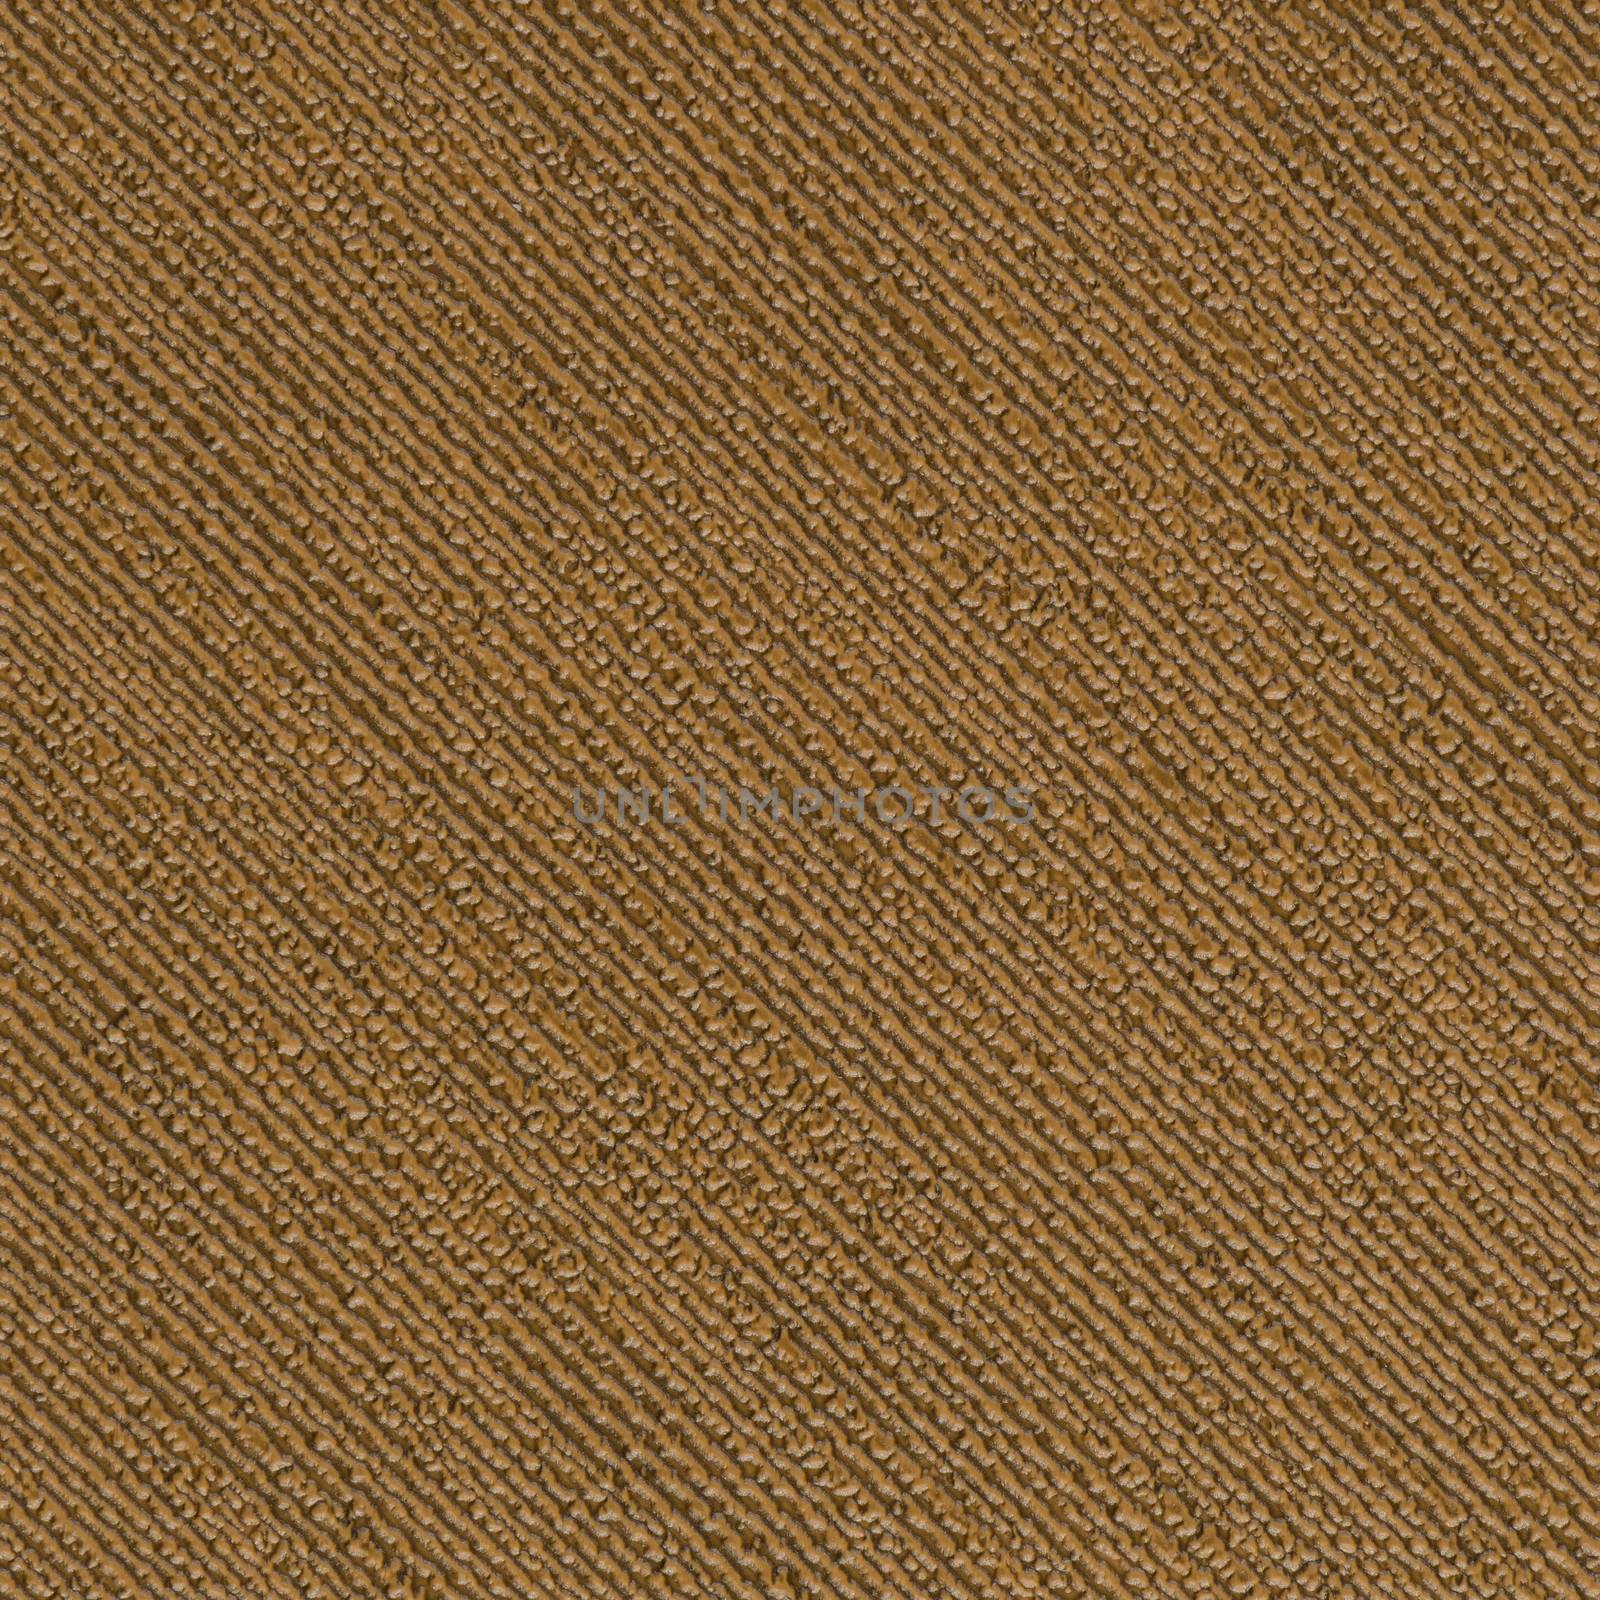 Brown vinyl texture by homydesign